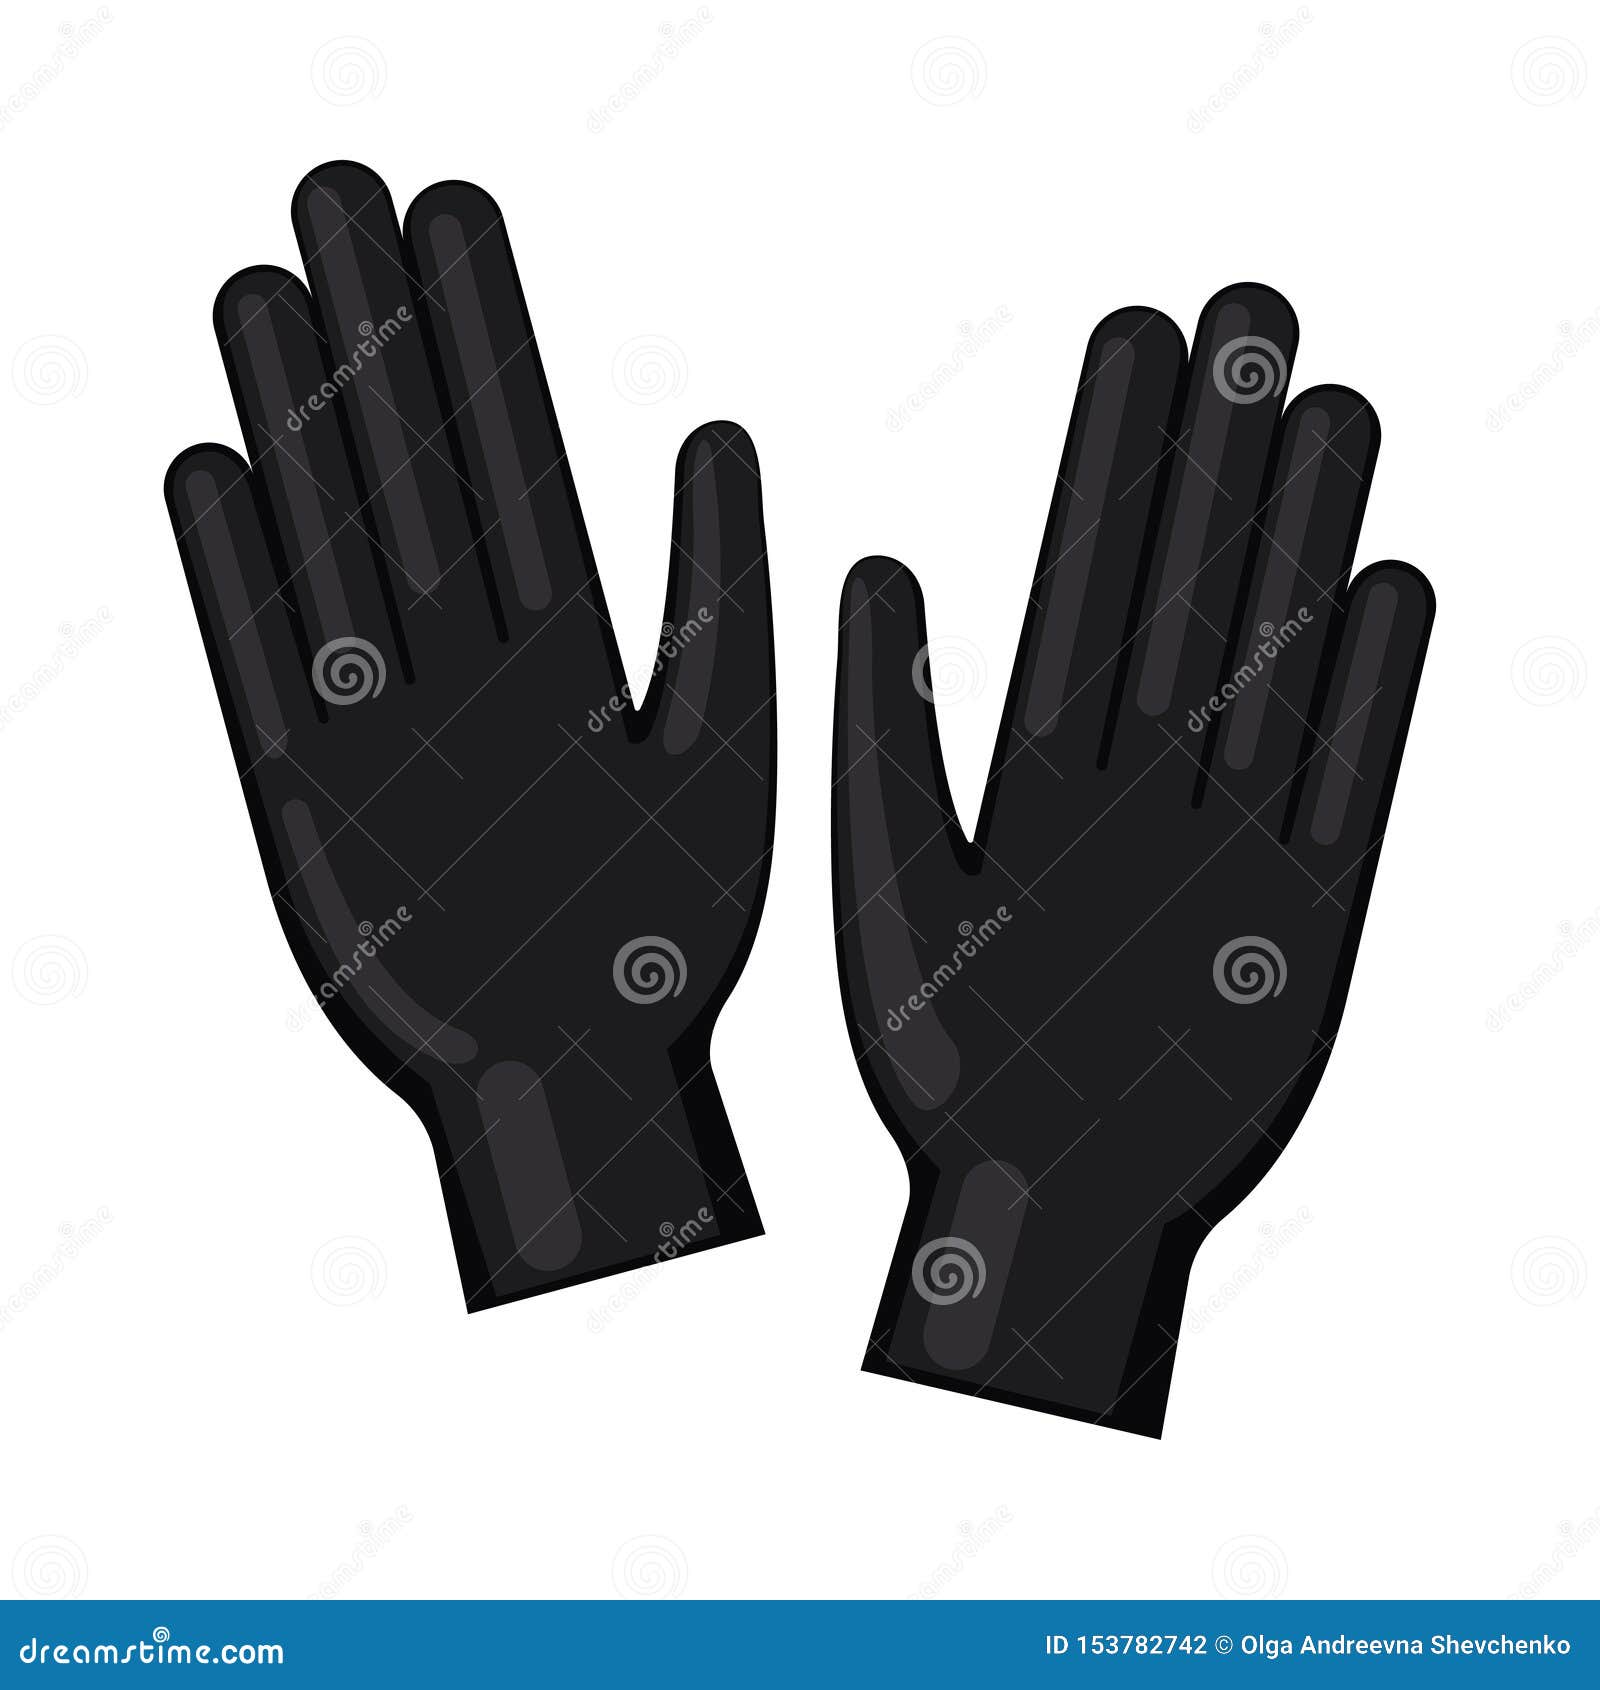 Cartoon Black Disposable Nitrile Gloves Stock Vector - Illustration of ...